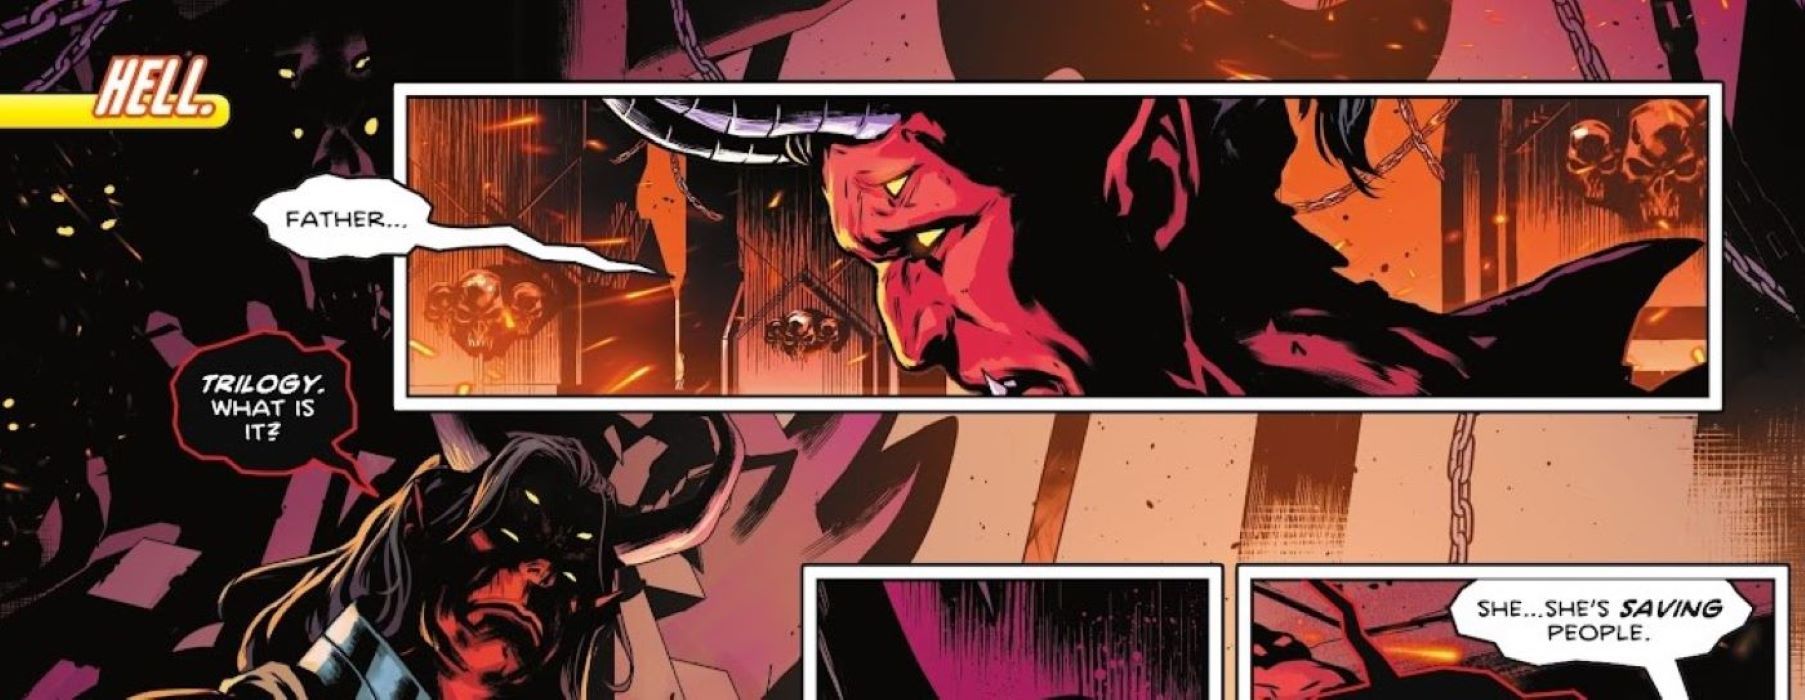 Titans Brings Back Raven’s Brother as a Major DC Villain – Powers & Origin of TRILOGY